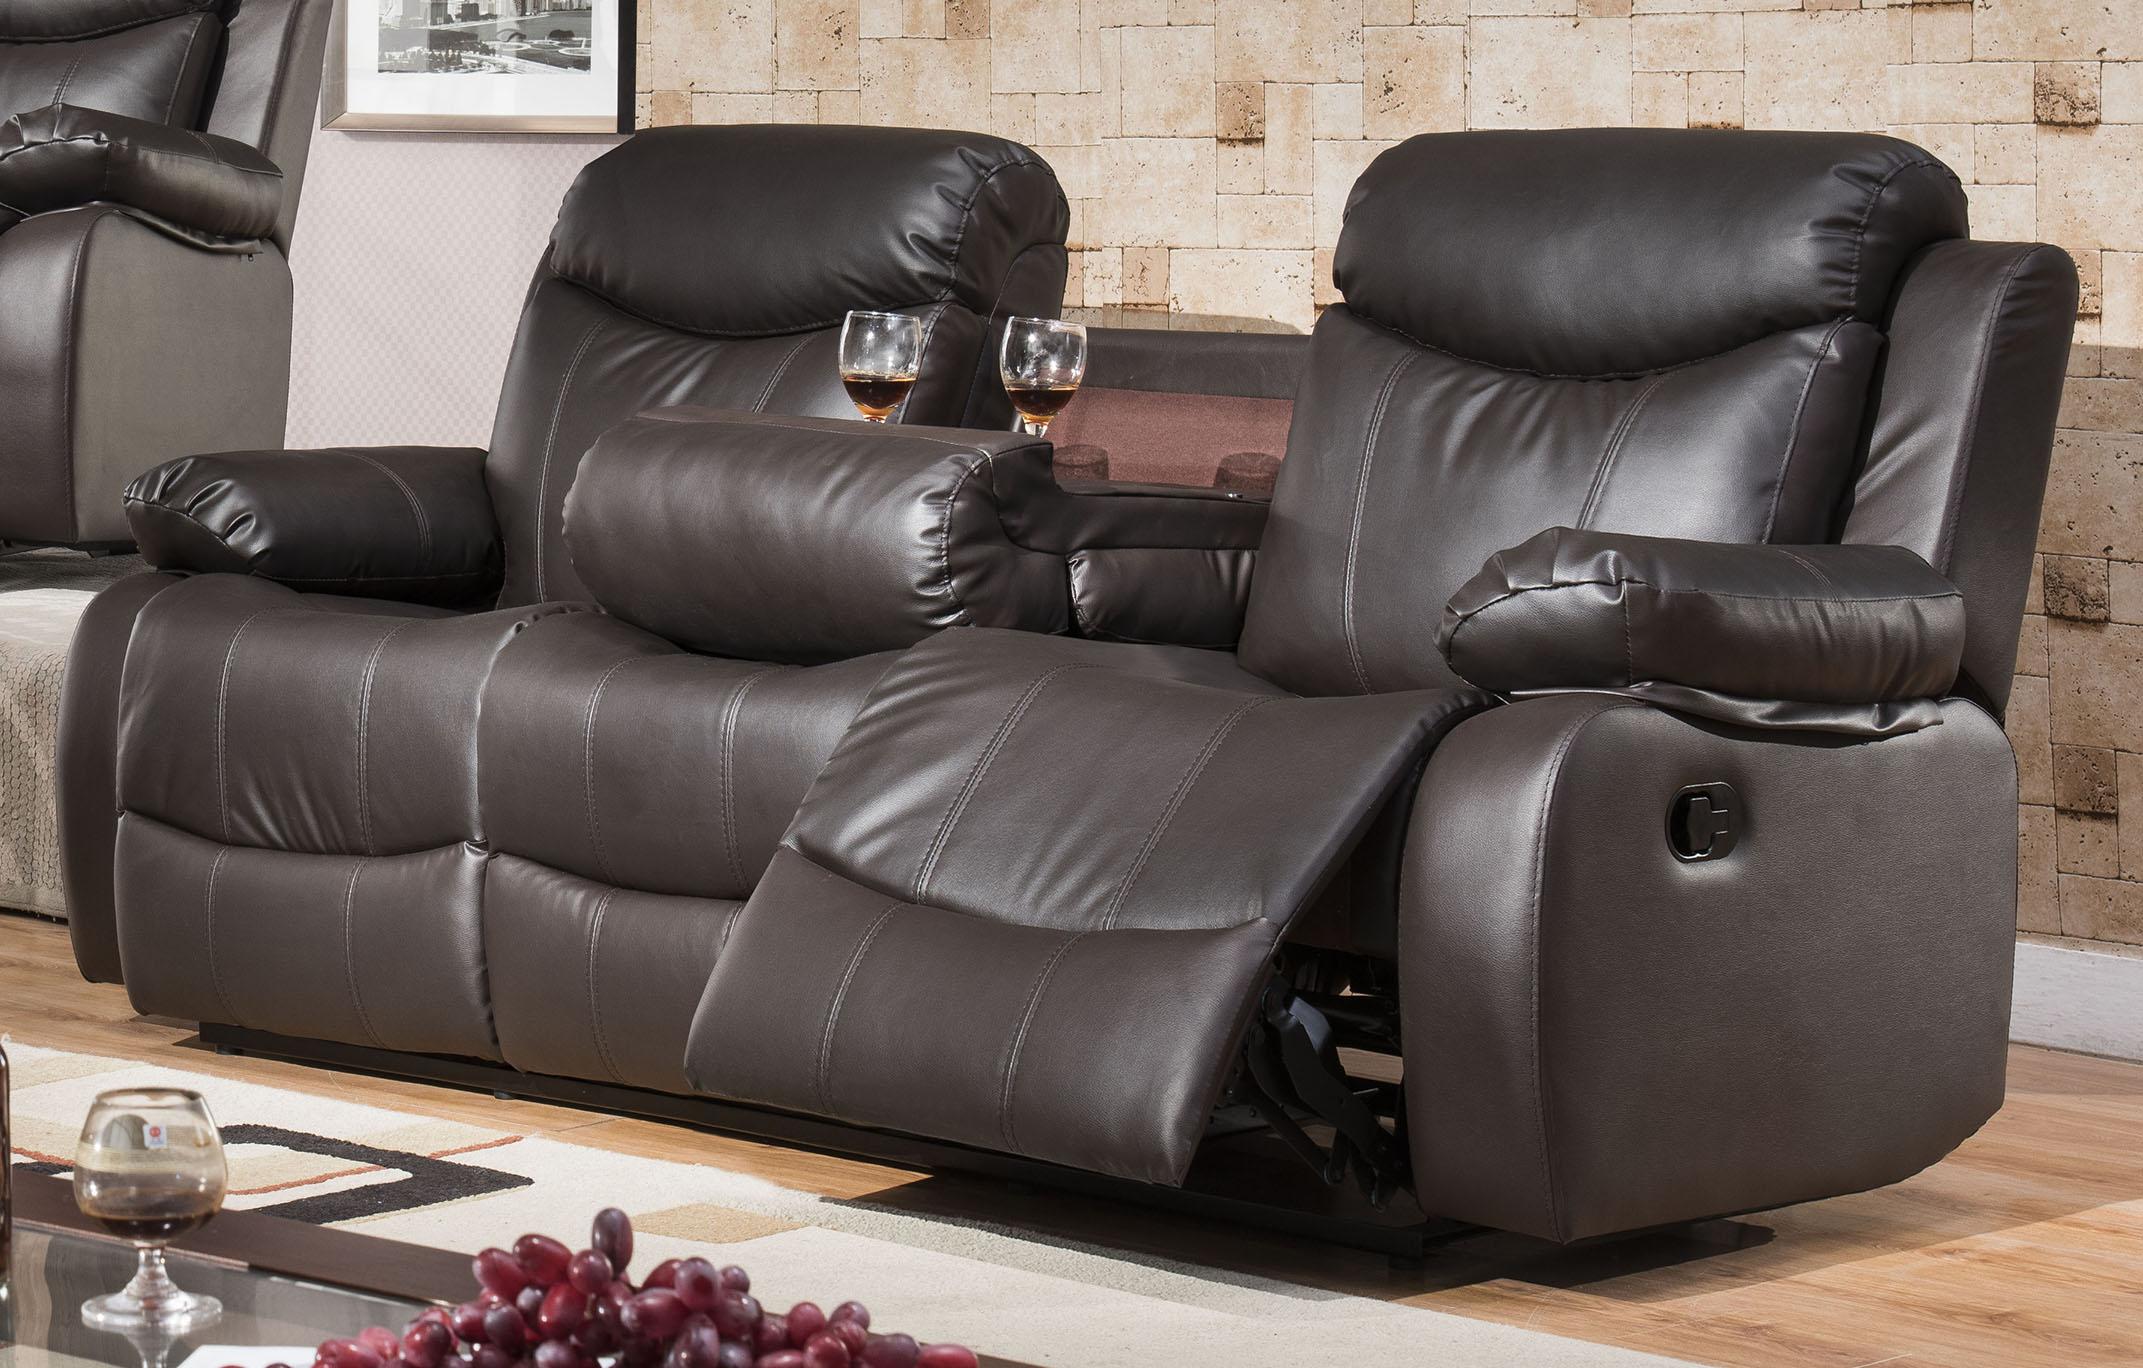 

    
McFerran SF3558 Contemporary Dark Brown PU Material Sofa Set w/ Dual Recliners 3Pcs
